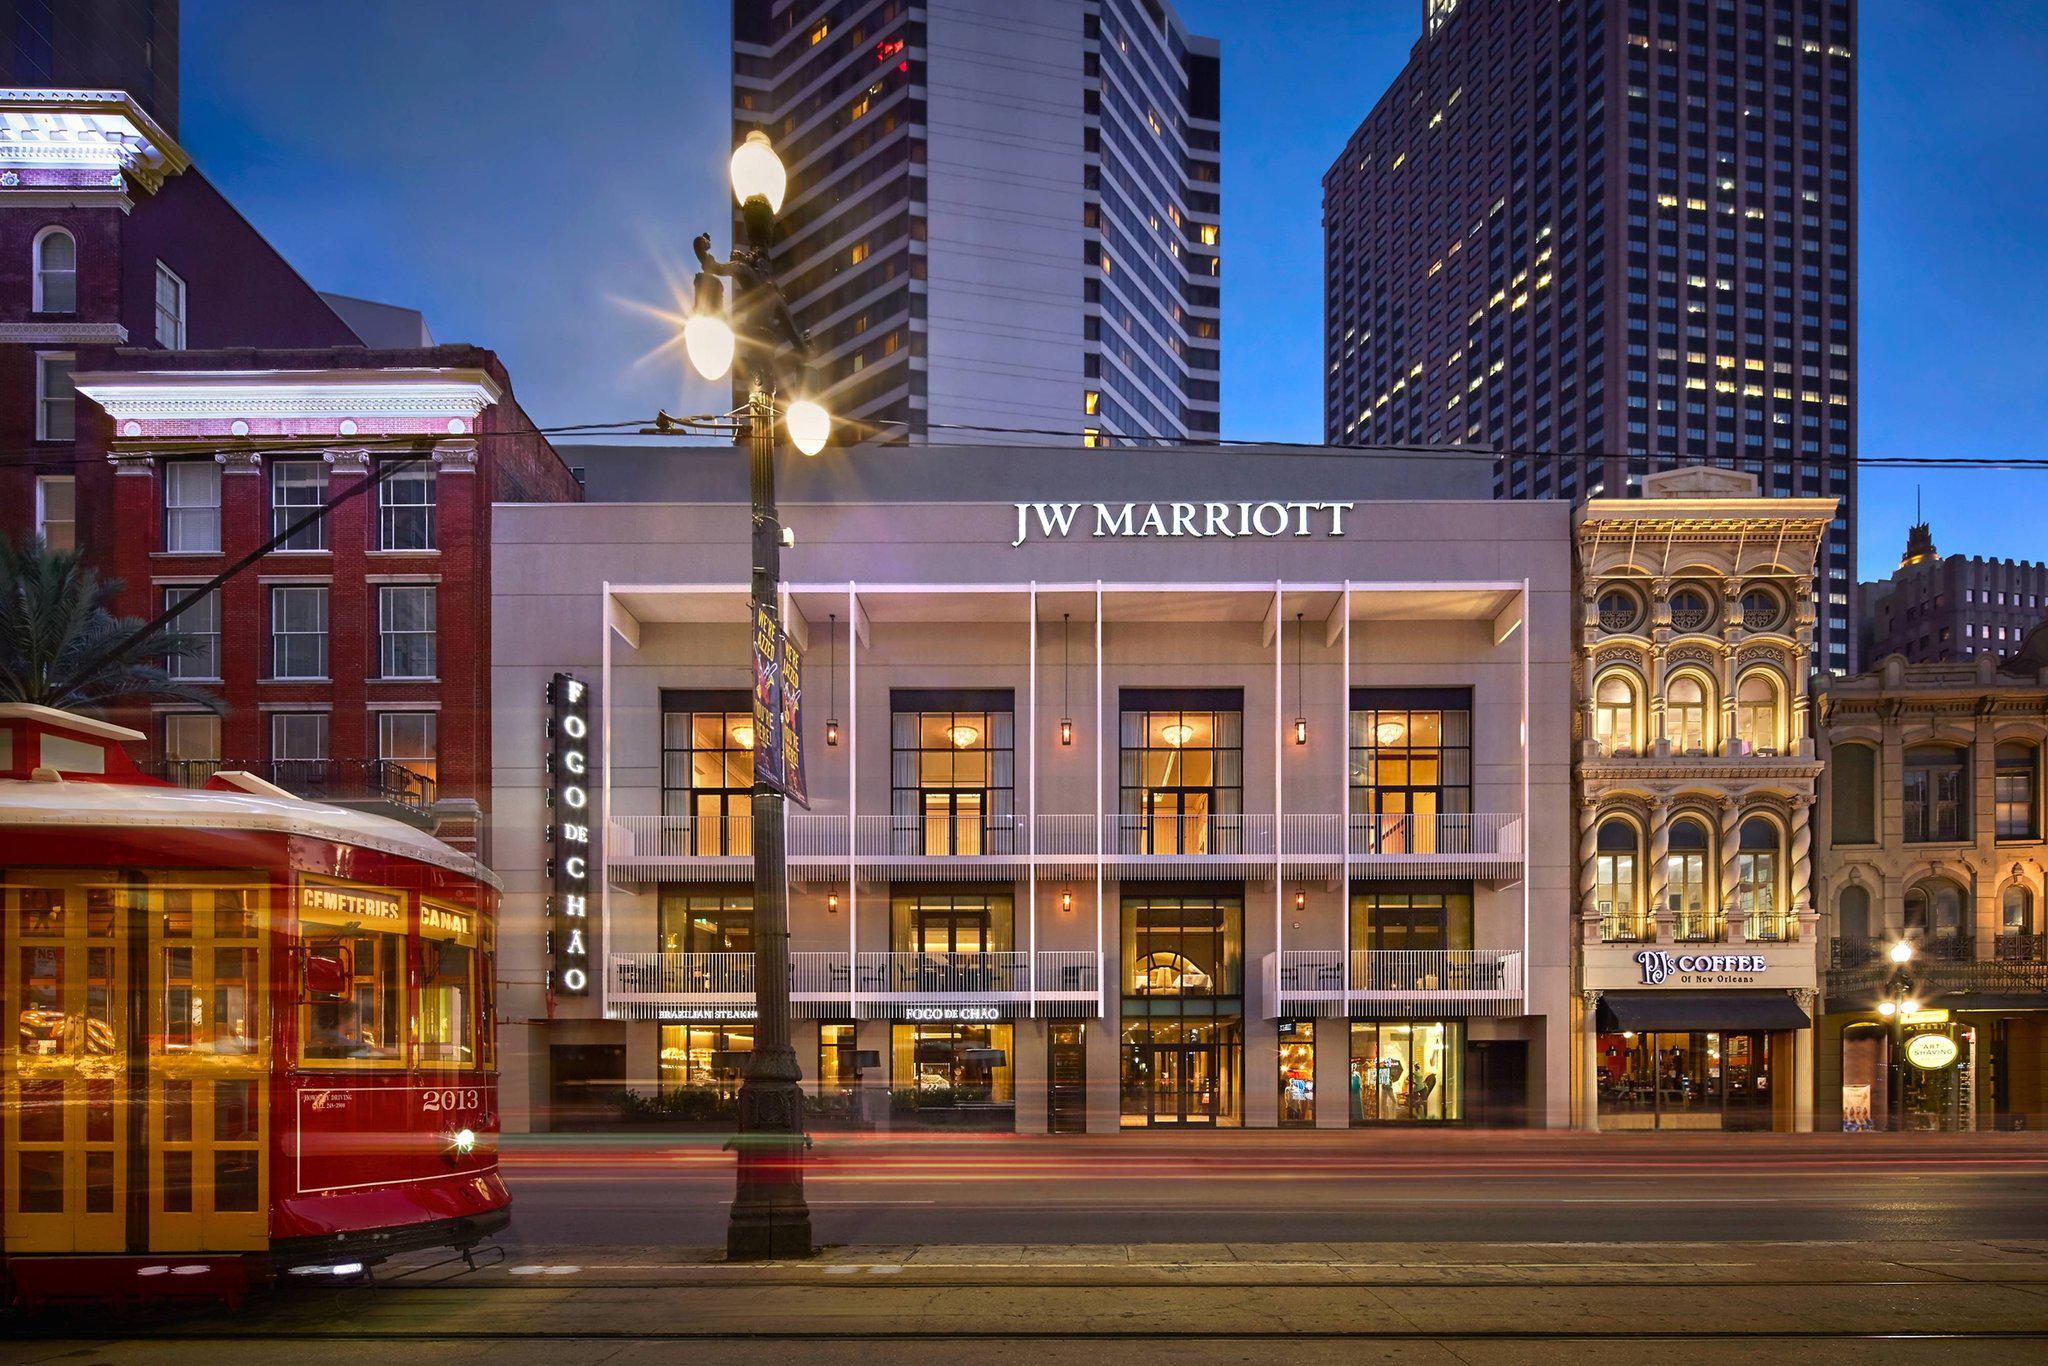 JW Marriott New Orleans Photo